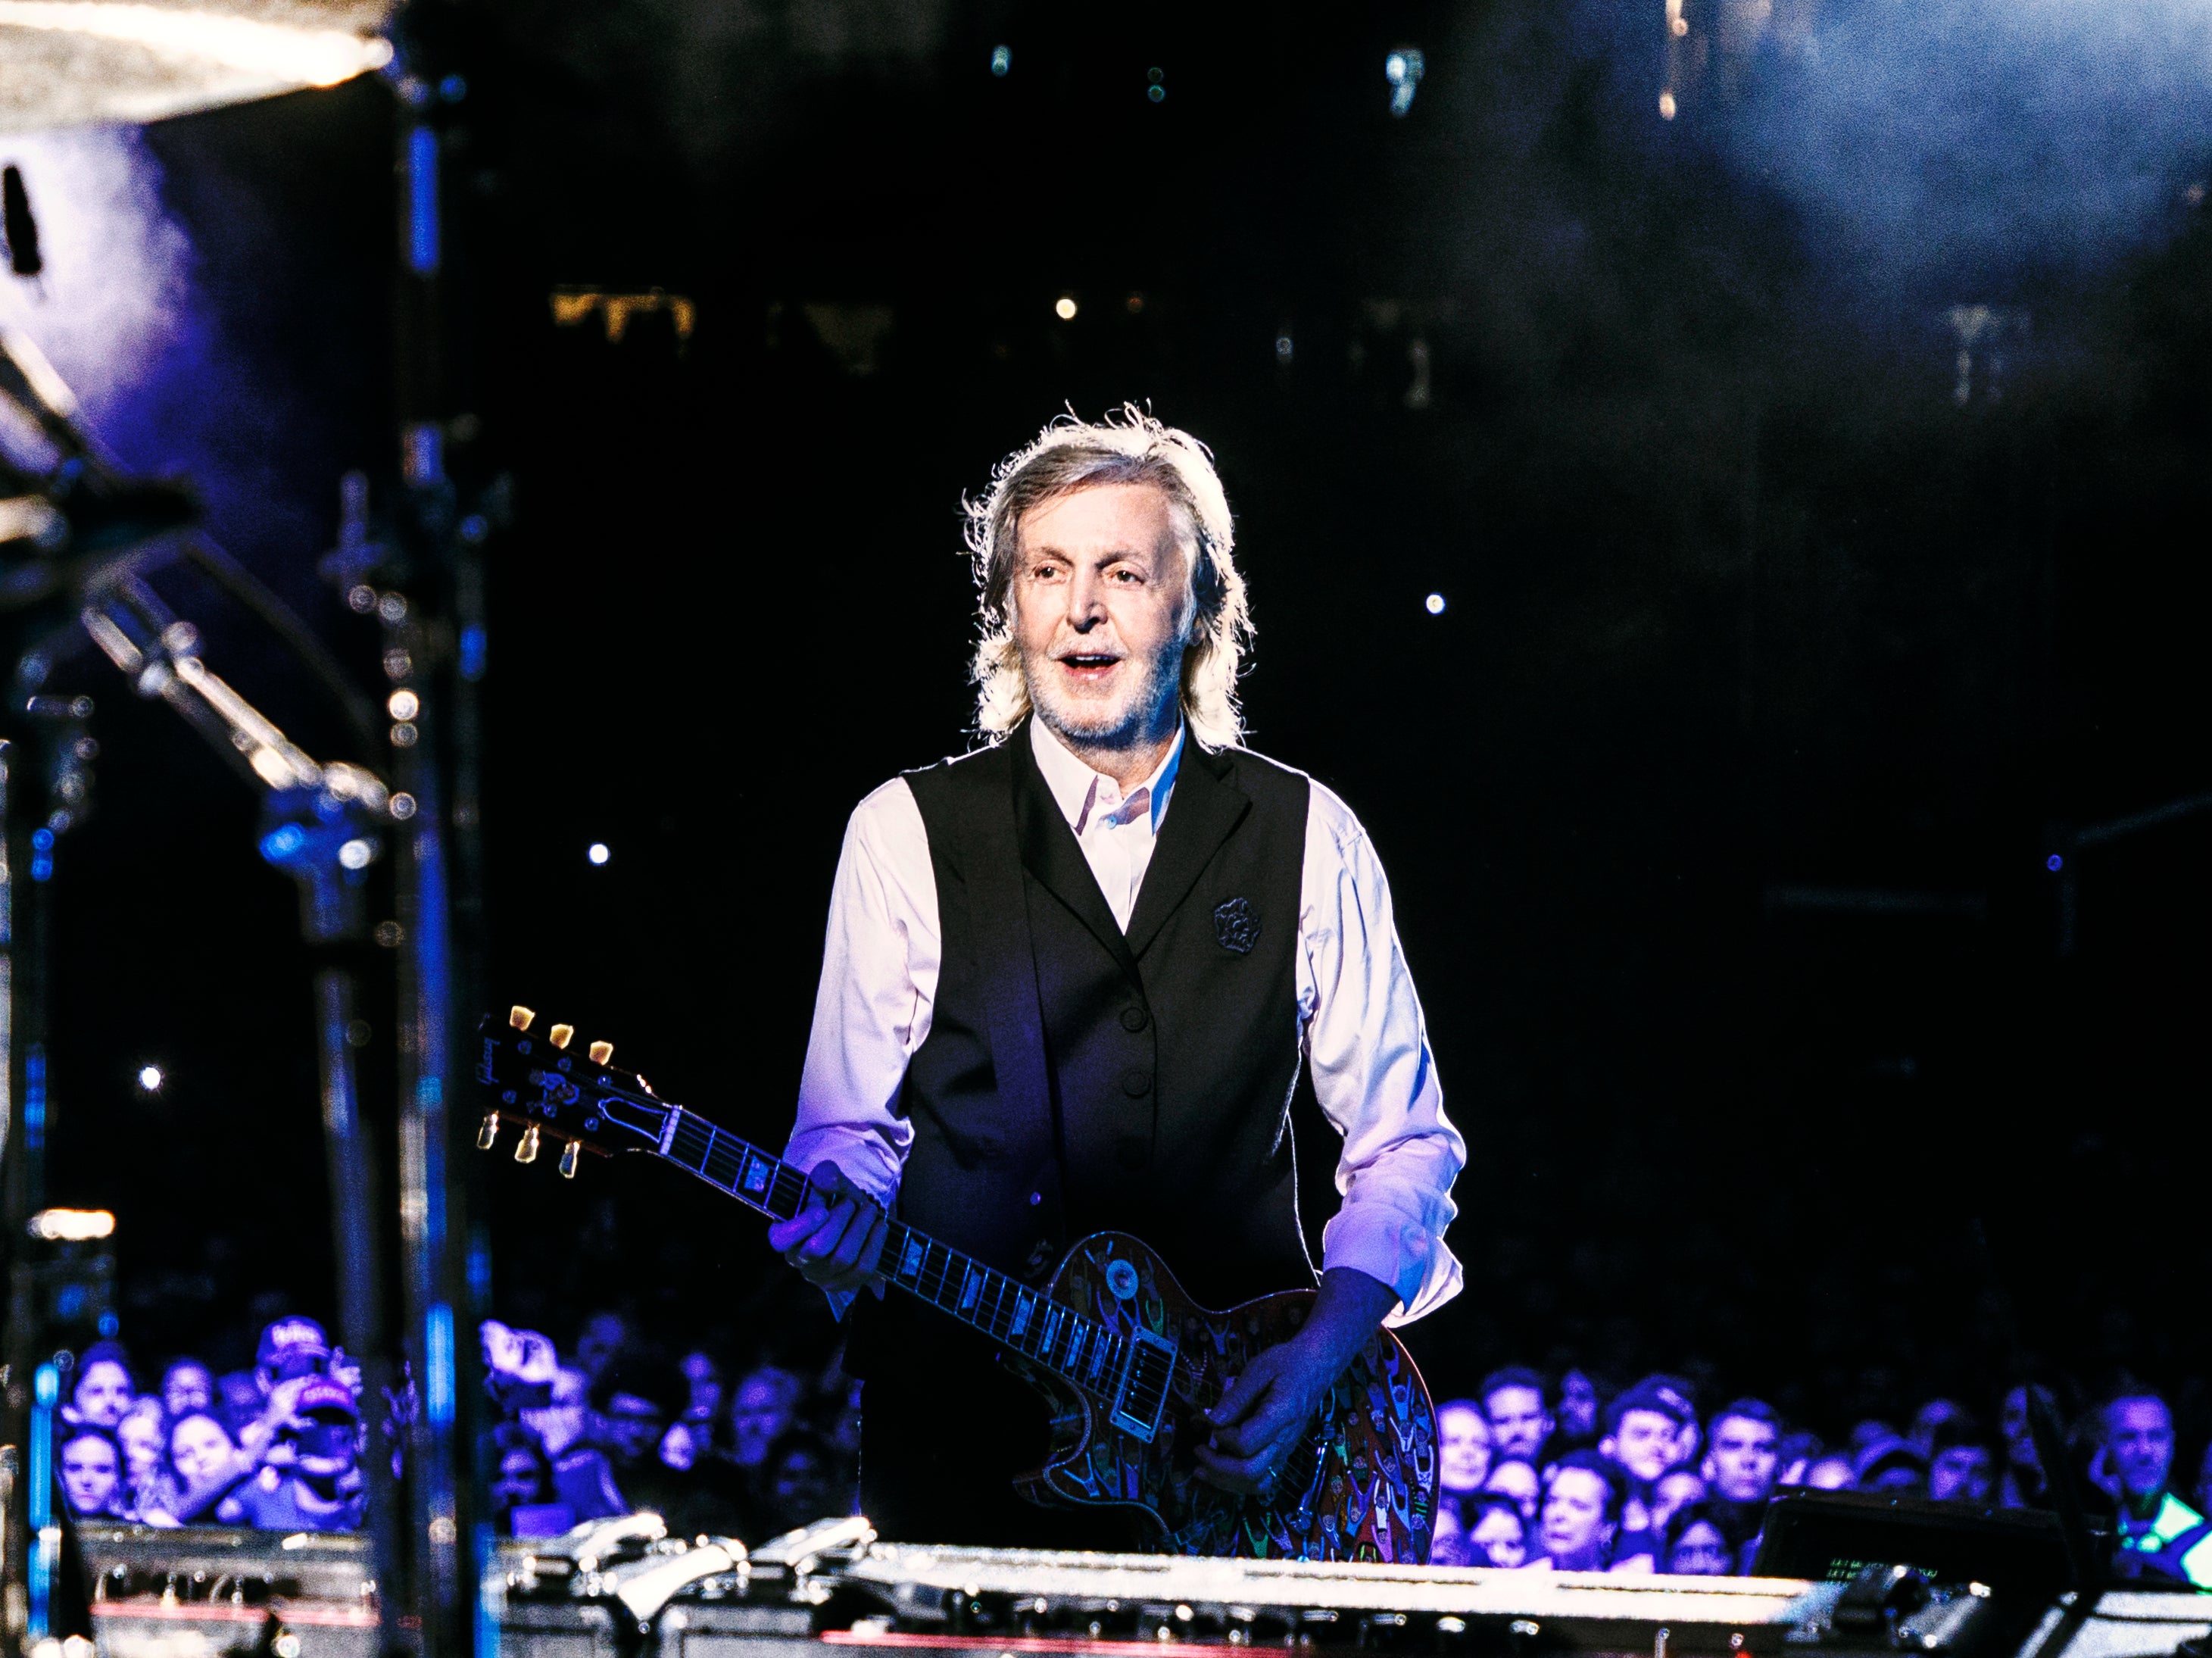 Paul McCartney plays during his Got Back tour